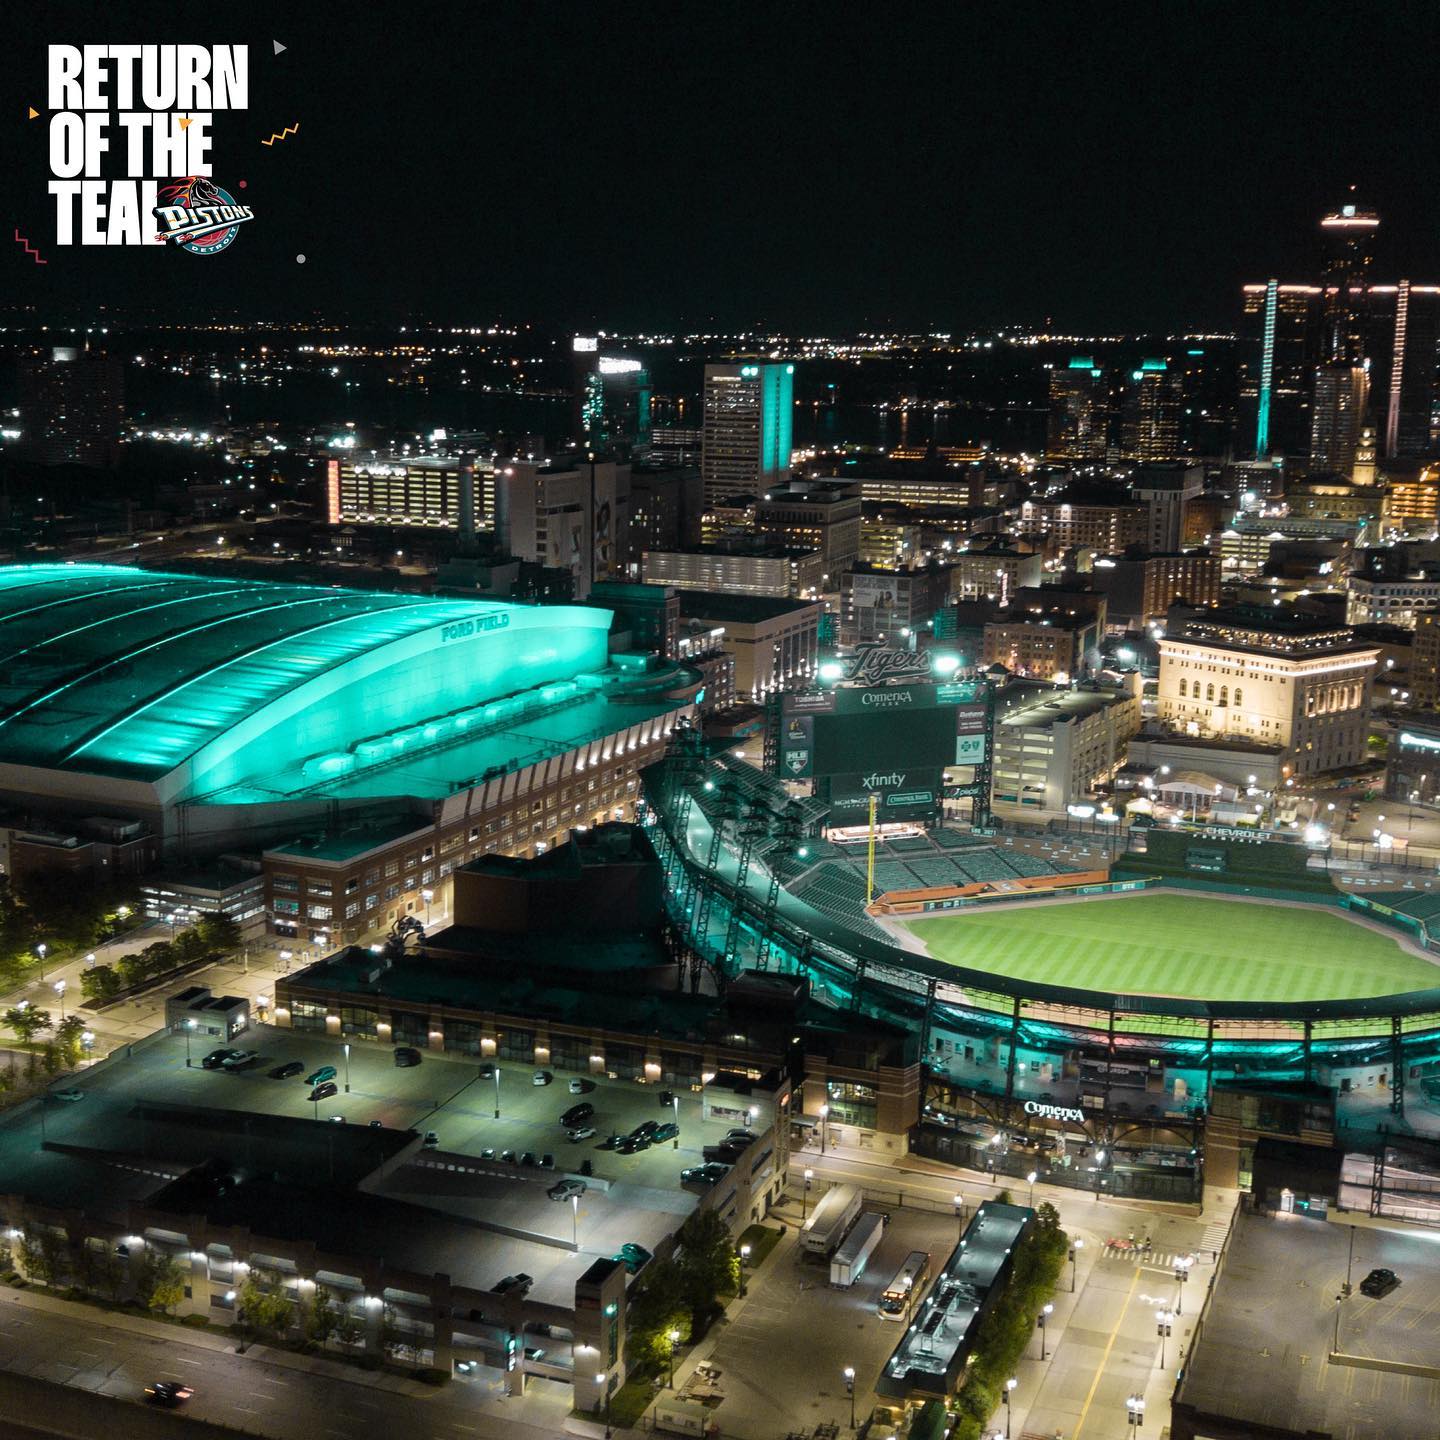 Detroit city was lit last night. #ReturnOfTheTeal...